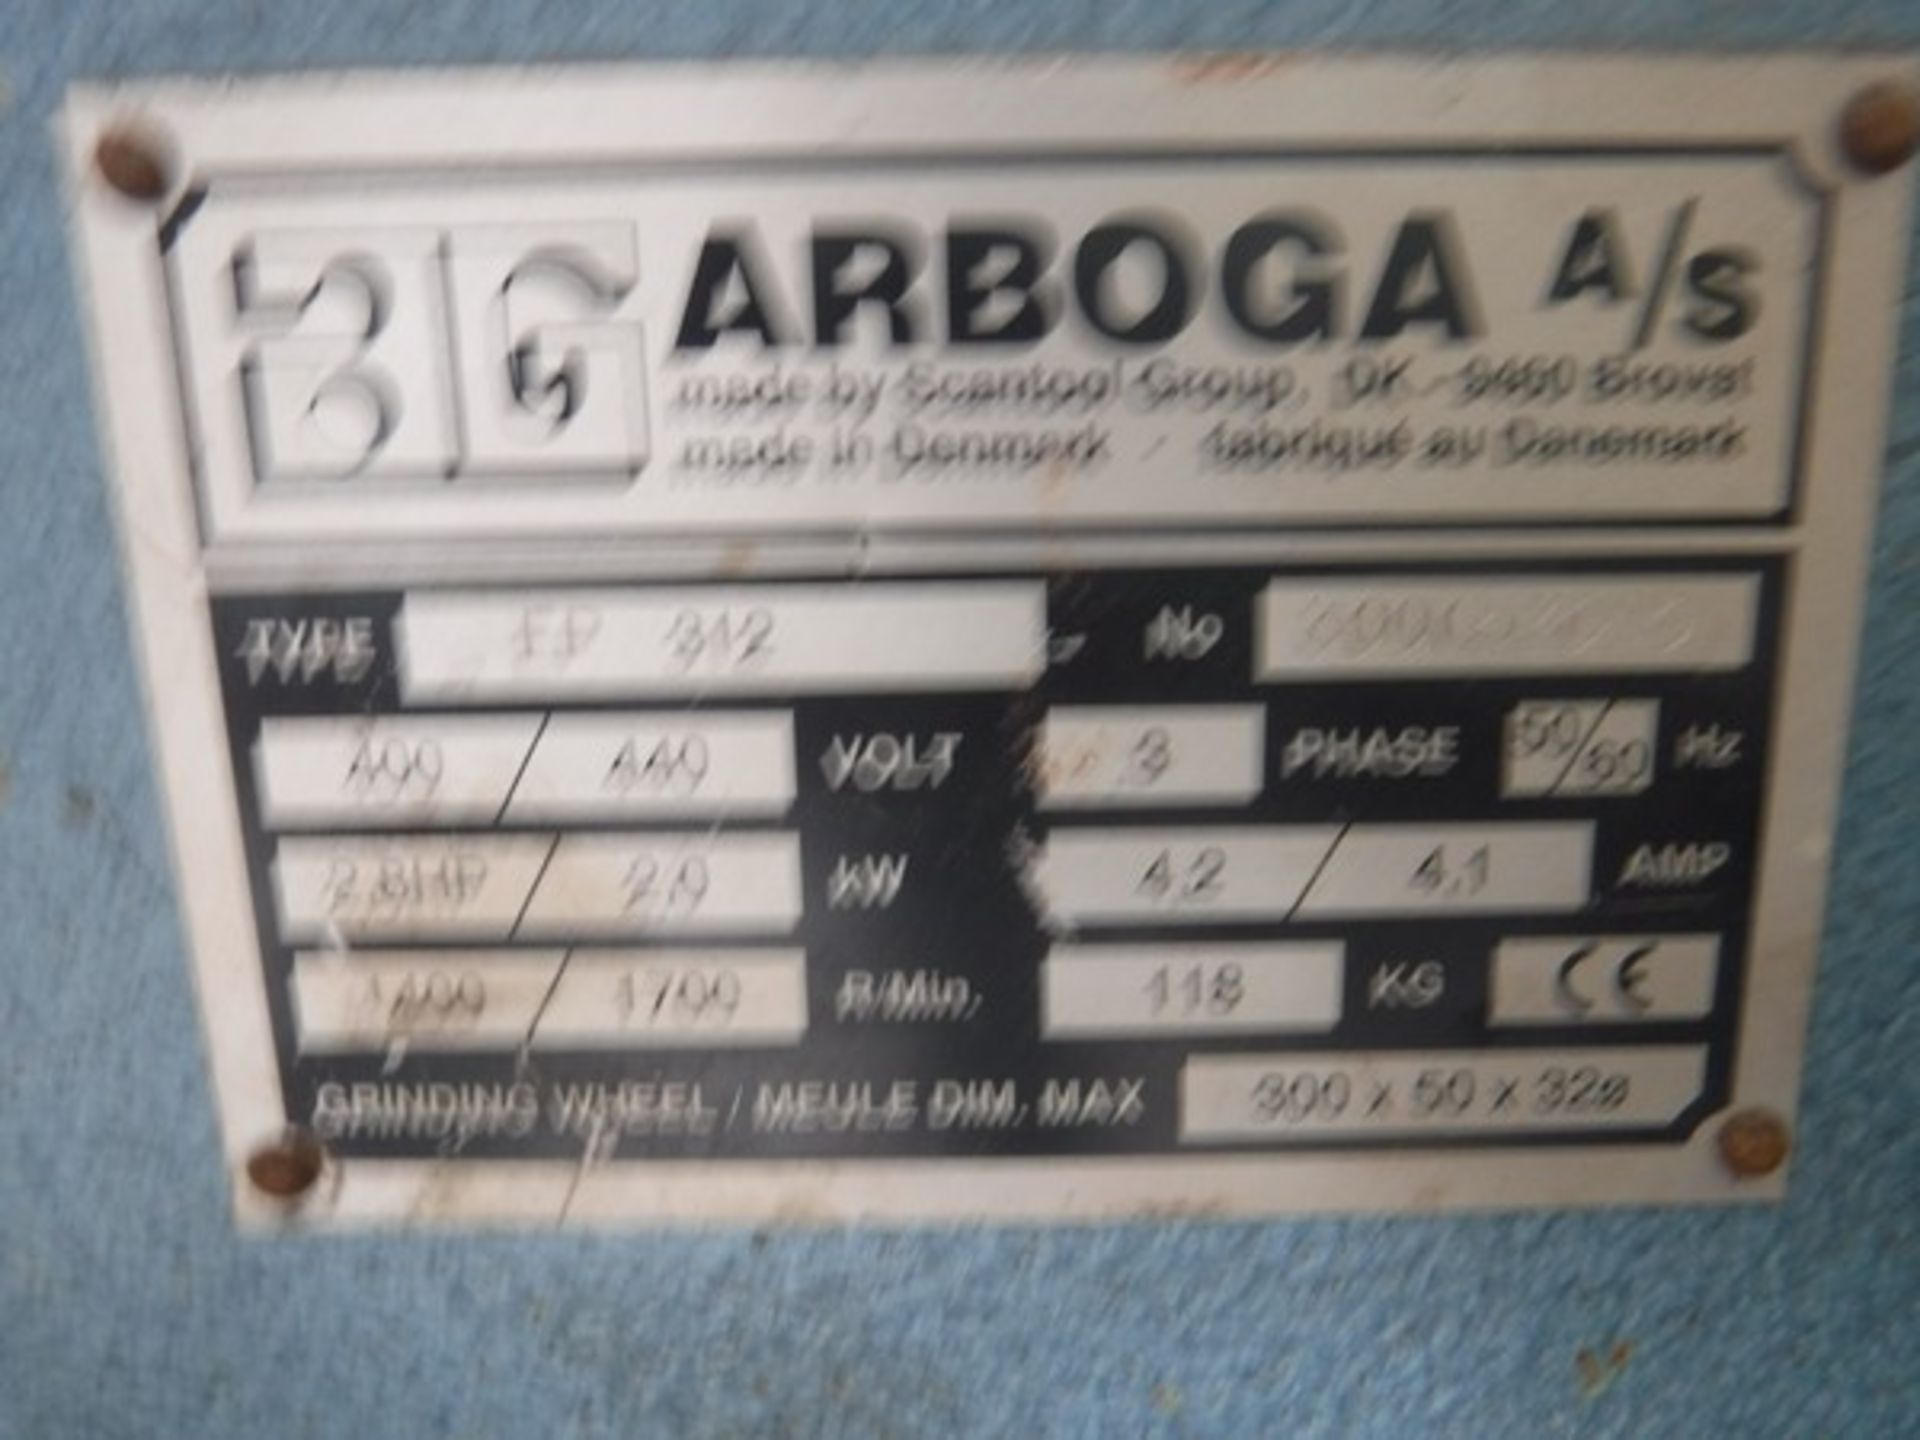 ARBOGA A/S EP312 grinder s/n 300653050 - Image 2 of 2